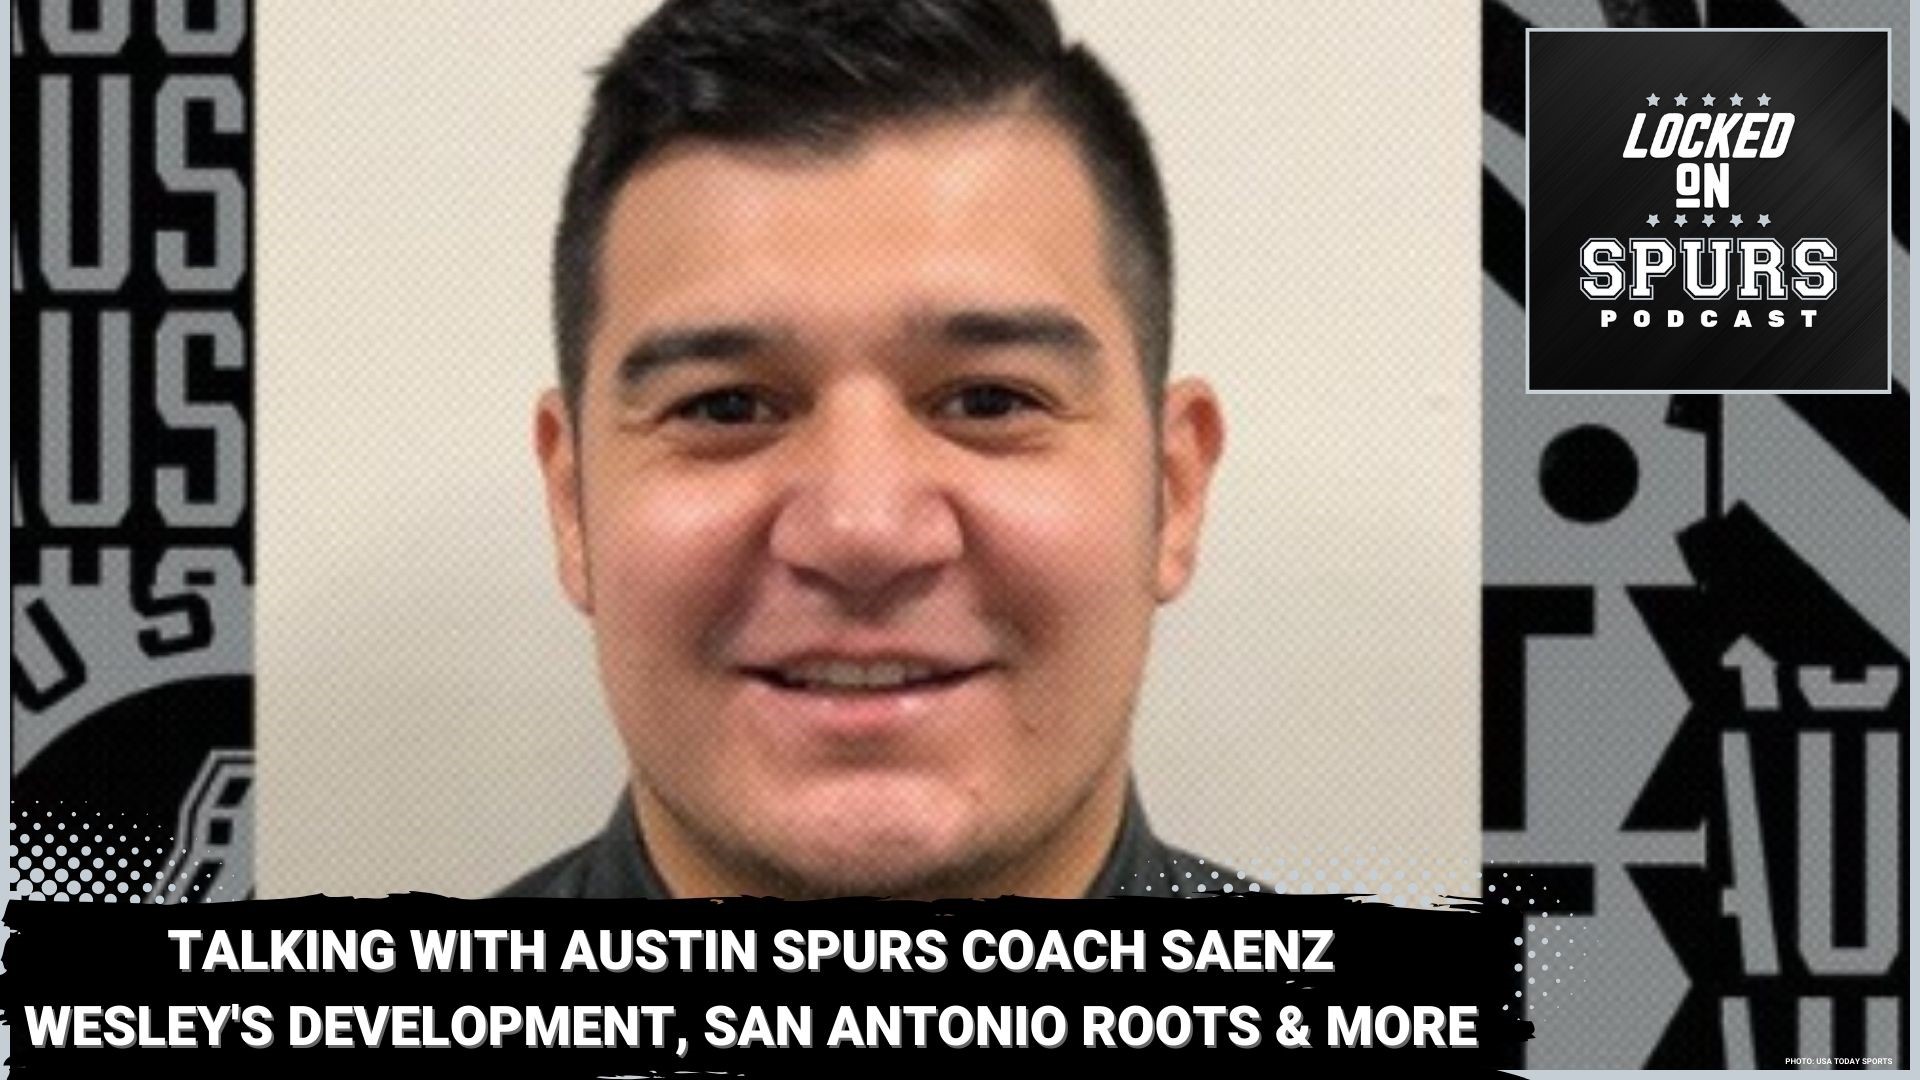 The native San Antonian is forging his own NBA coaching path.